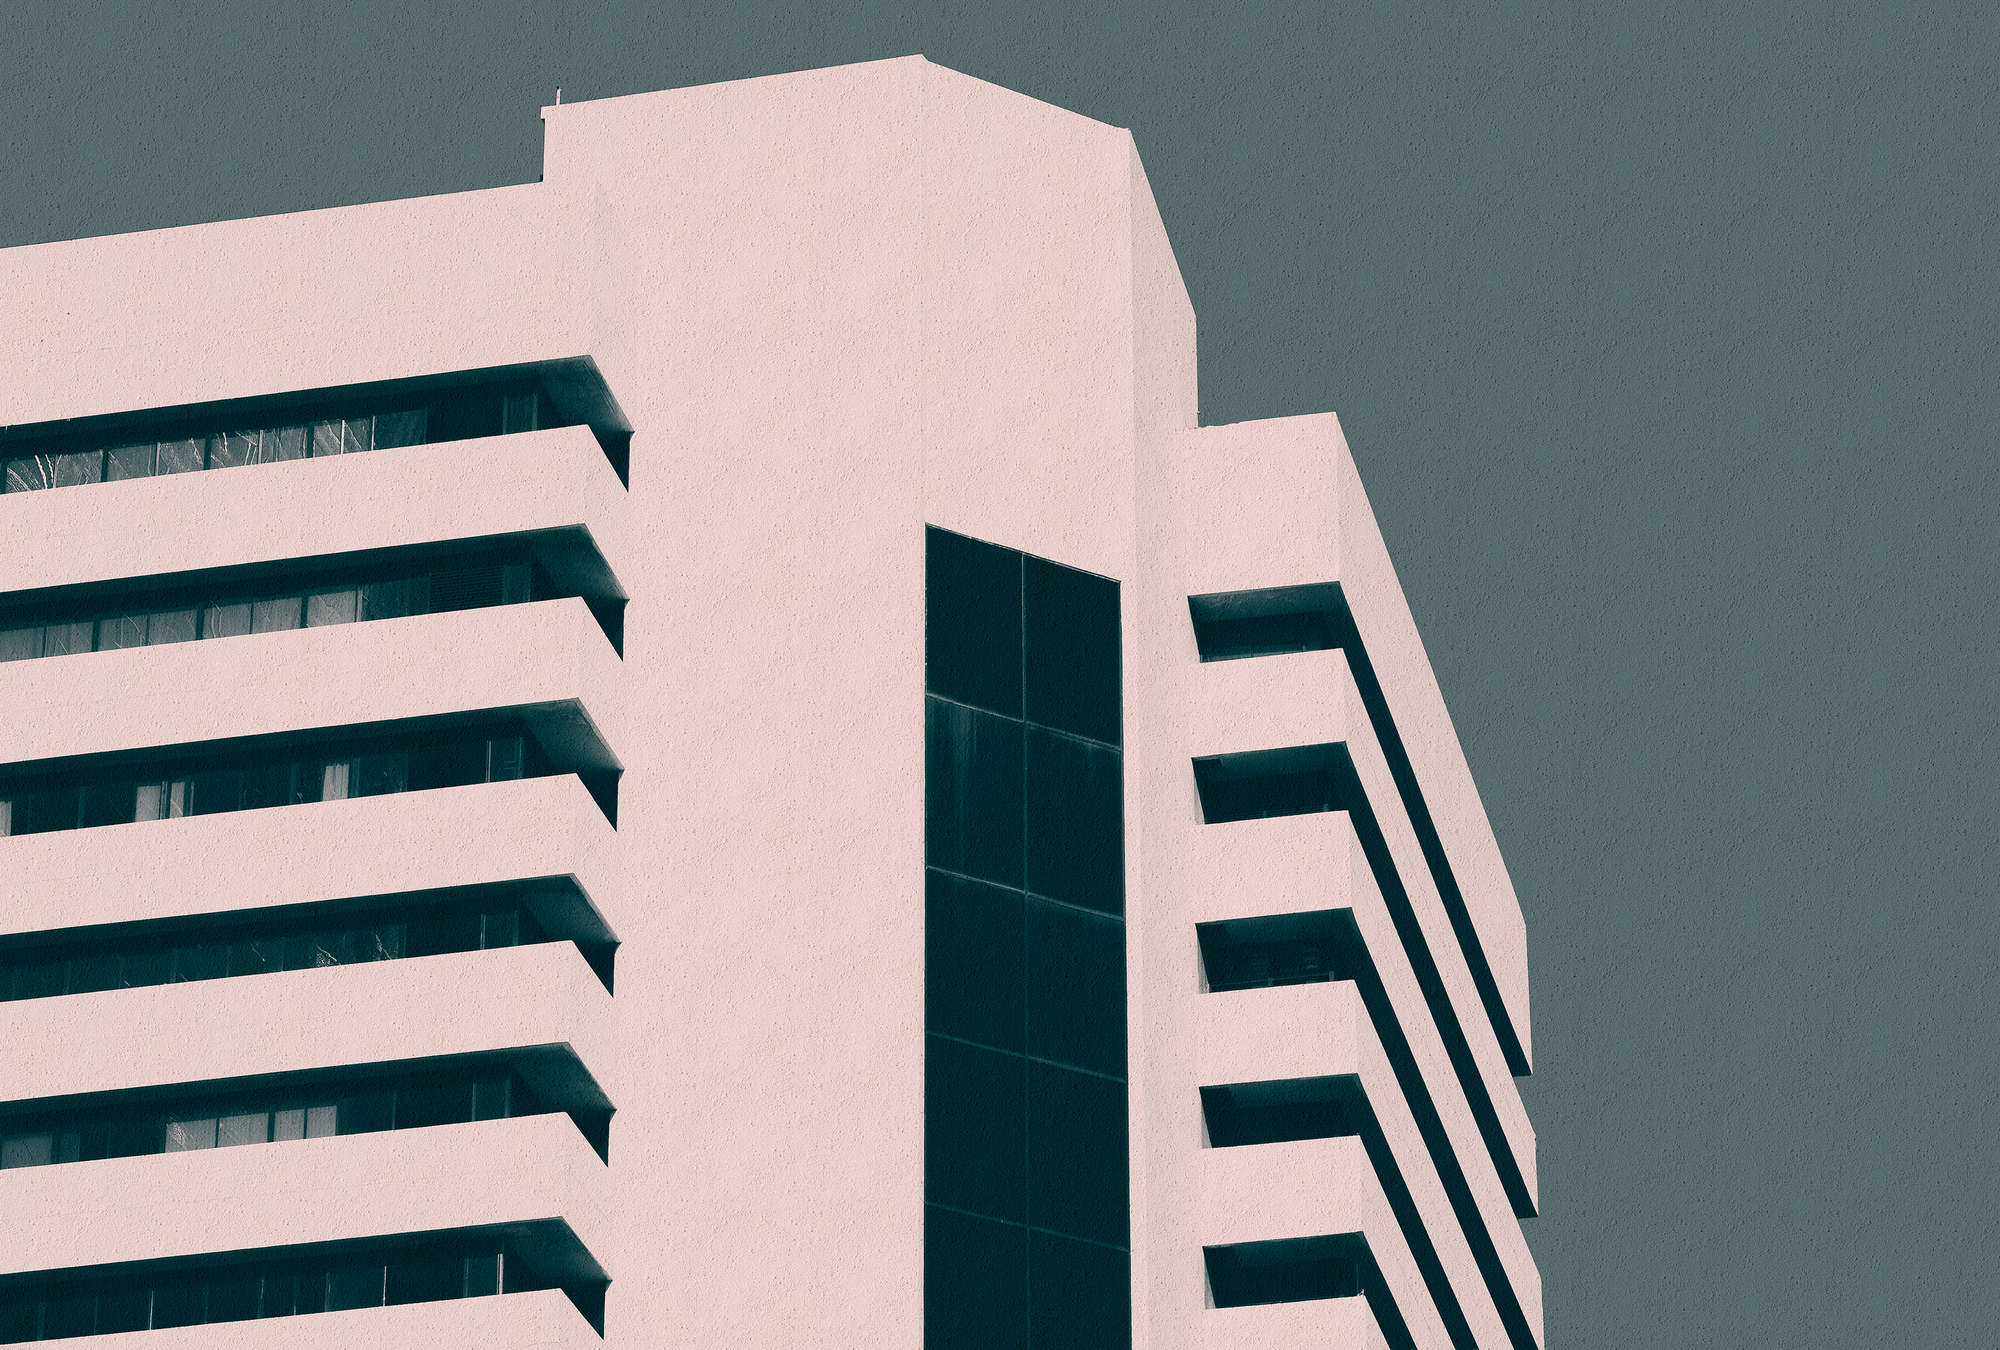             Skyscraper 2 - papier peint avec architecture urbaine moderne - structure Raupuz - vert, rose | Premium intissé lisse
        